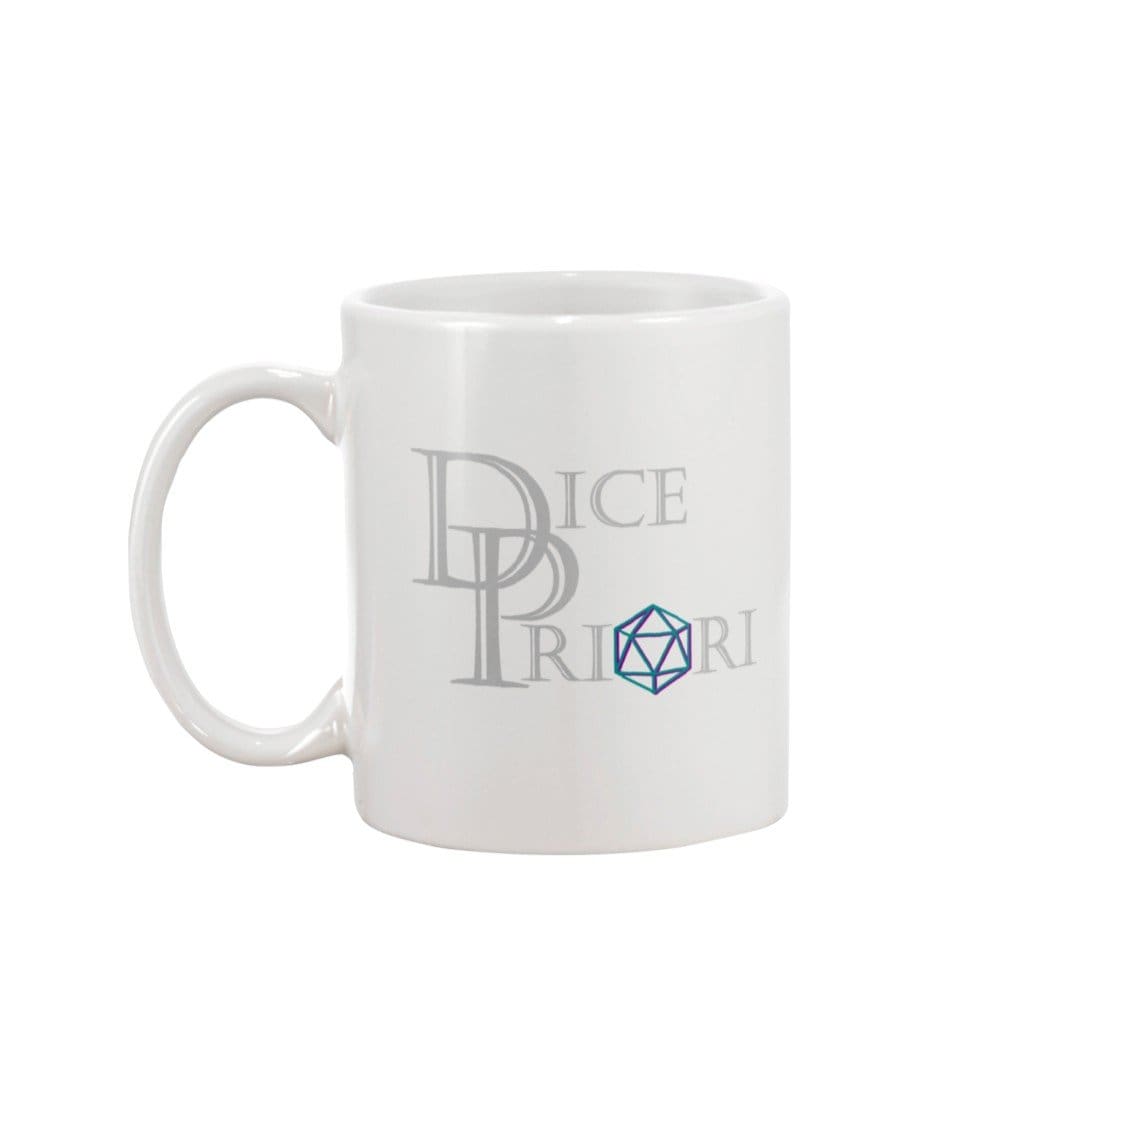 Dice Priori Classic Text Logo 15oz Coffee Mug - Dice Priori